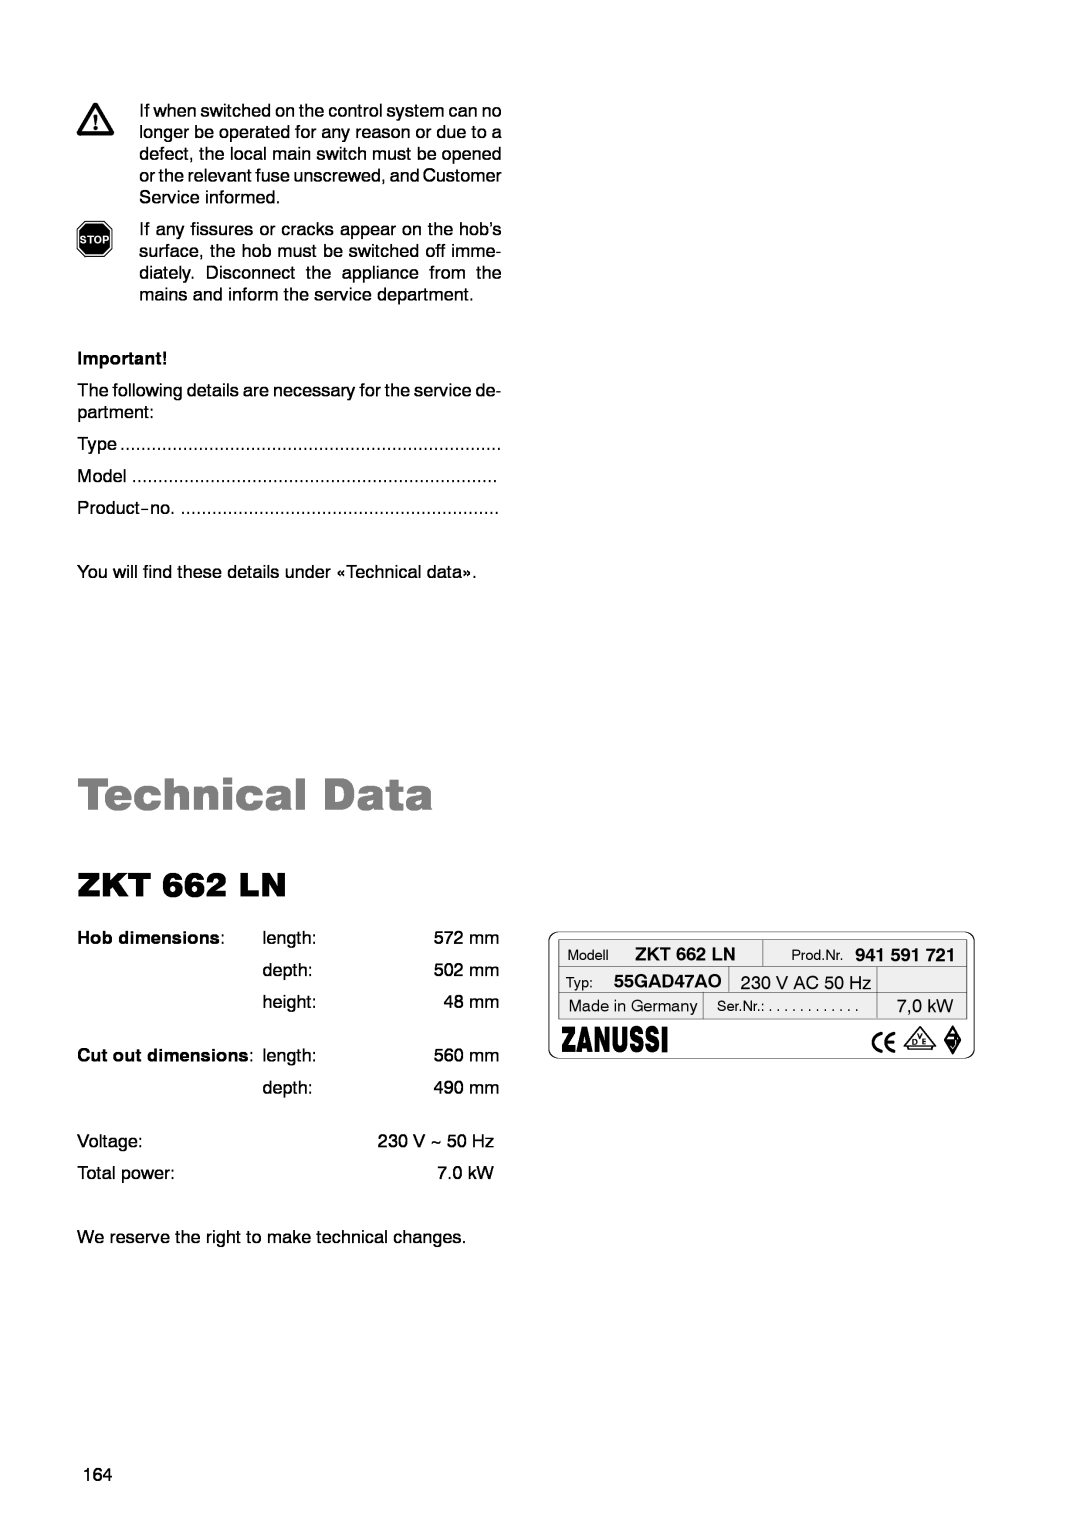 Zanussi ZKT 662 LN Technical Data, Hob dimensions, Cut out dimensions length, Prod.Nr. 941 591, 55GAD47AO 